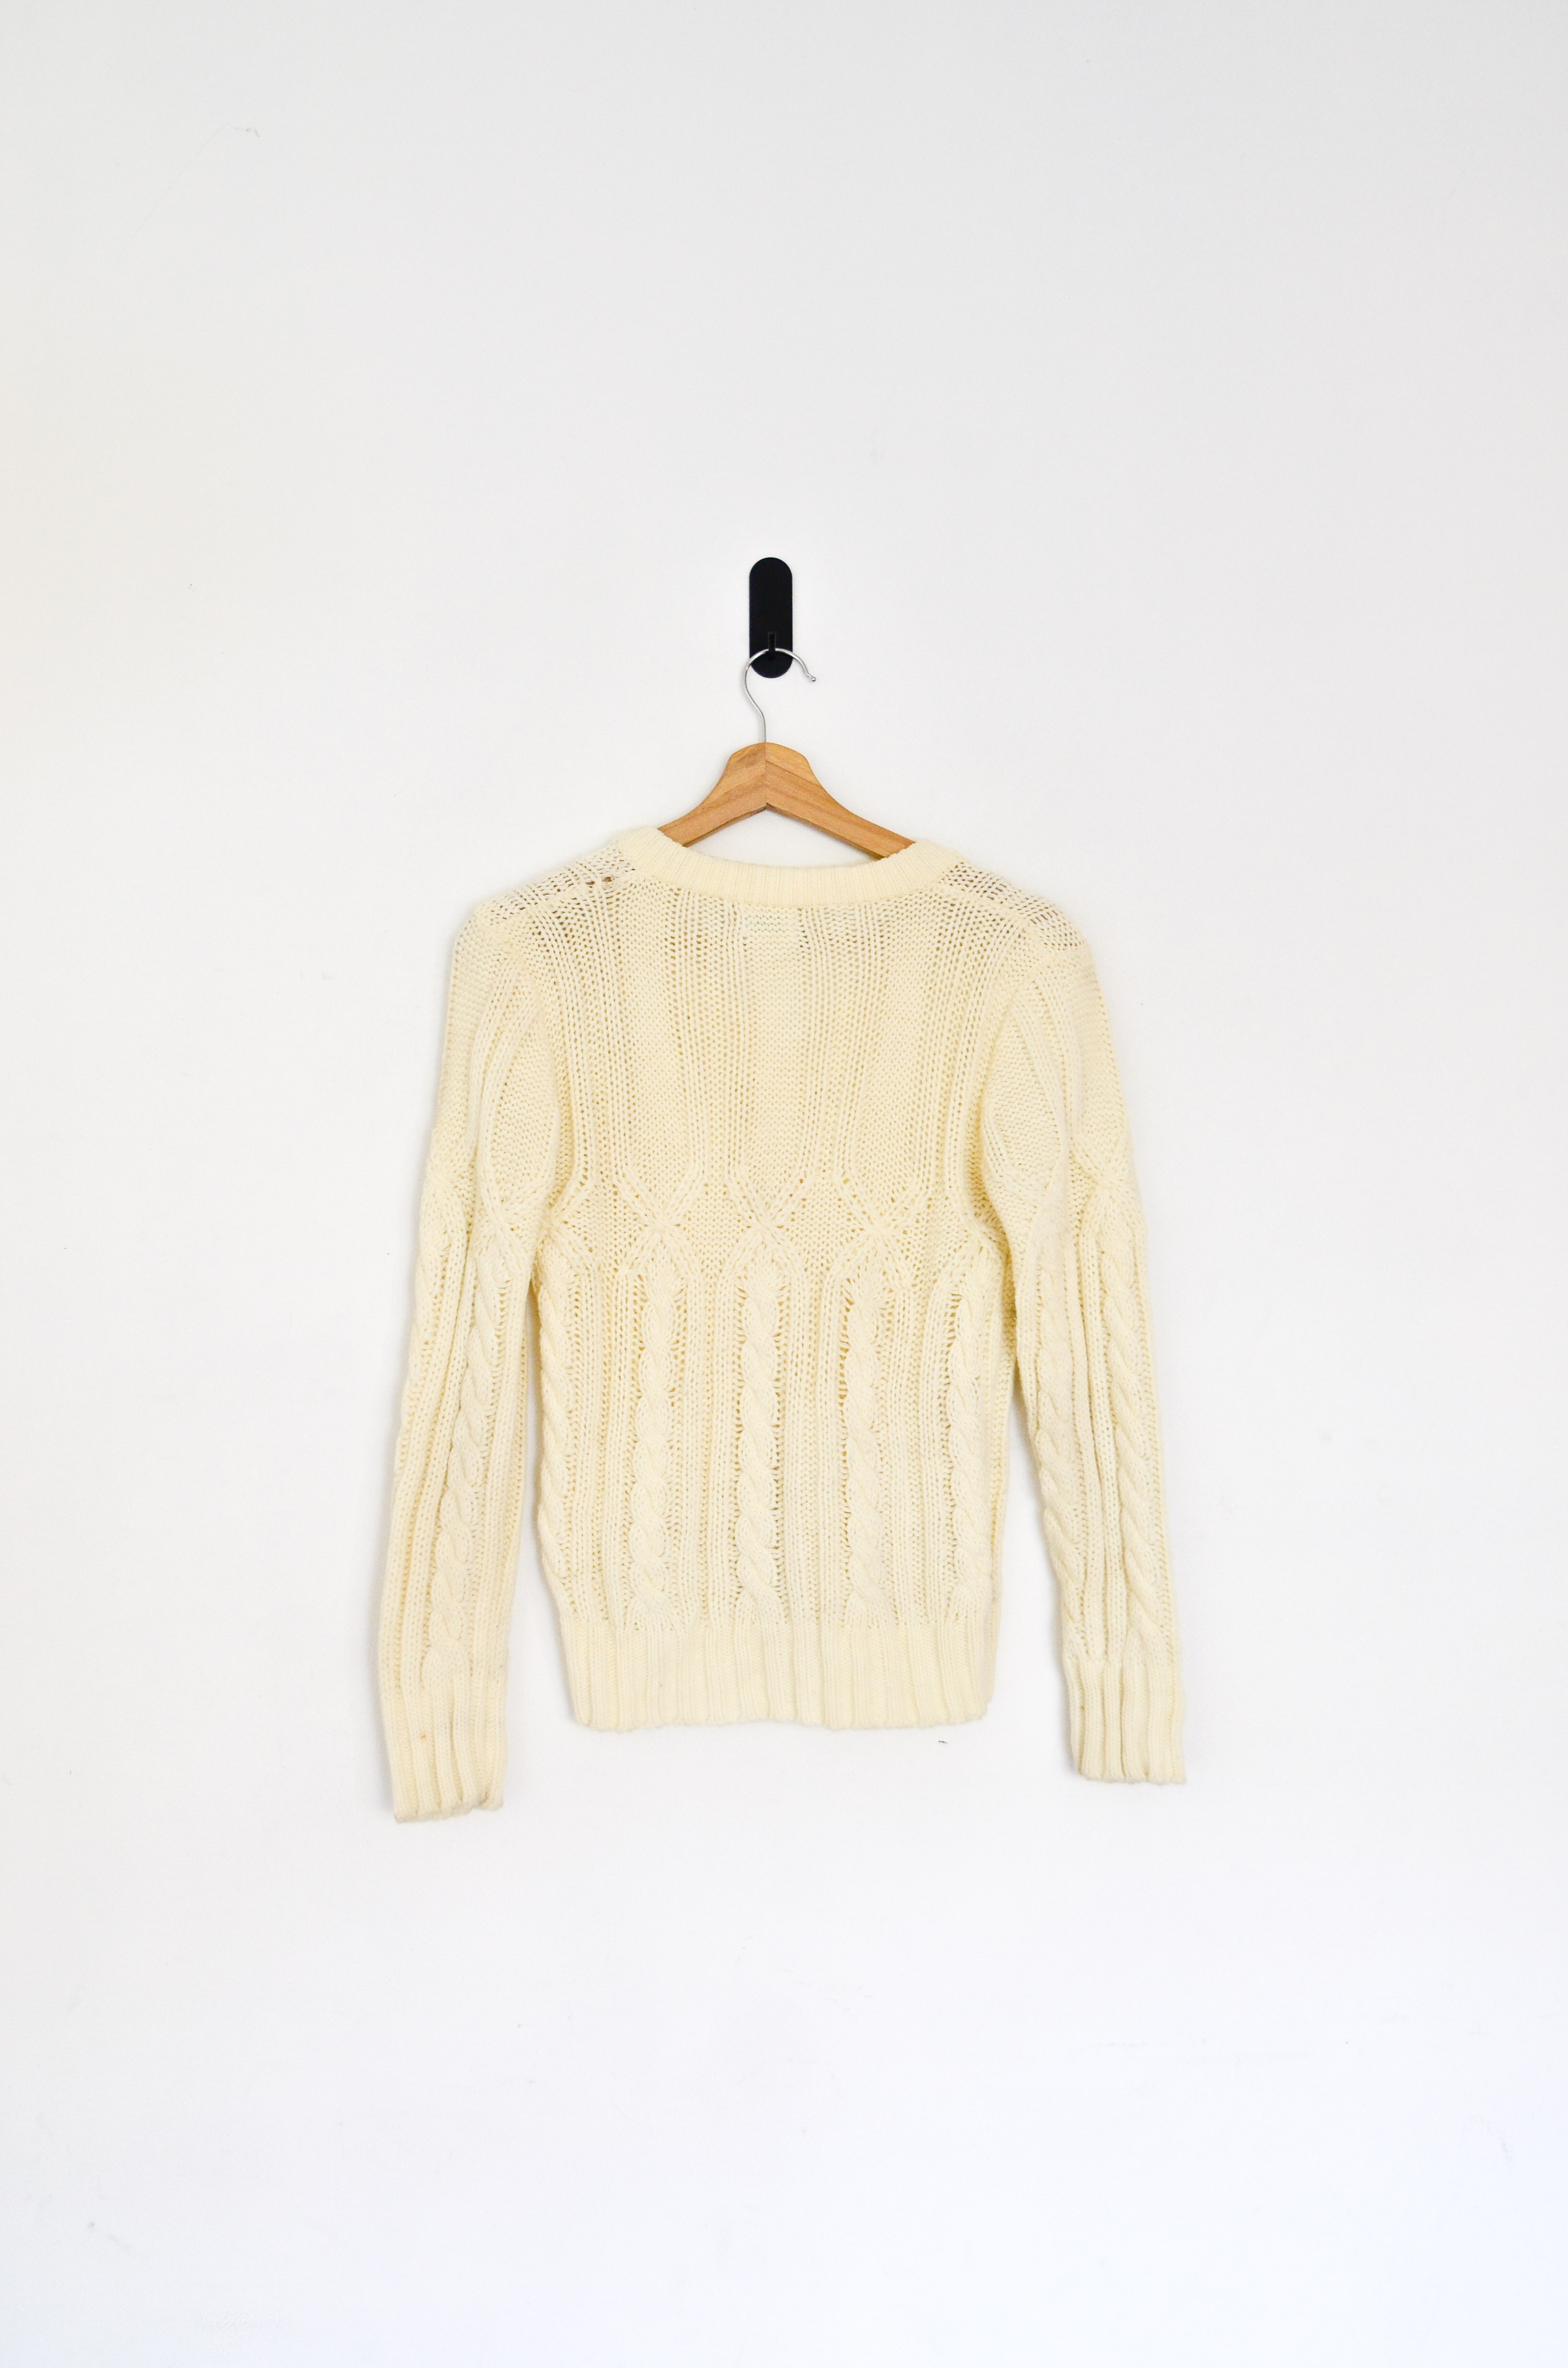 Sweater vintage marfil trenzado